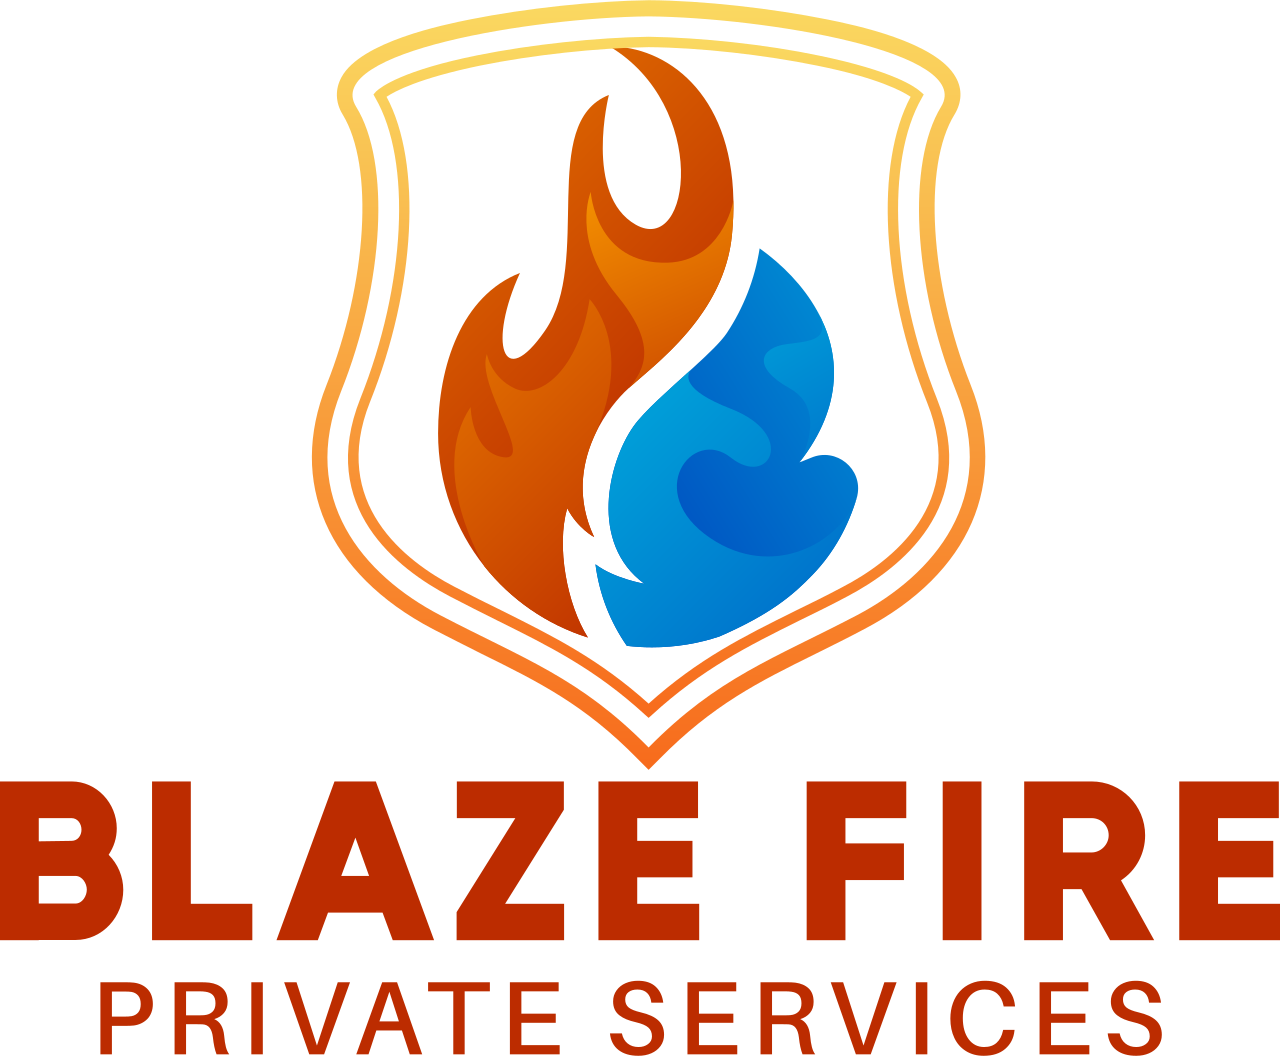 BLAZE FIRE's web page